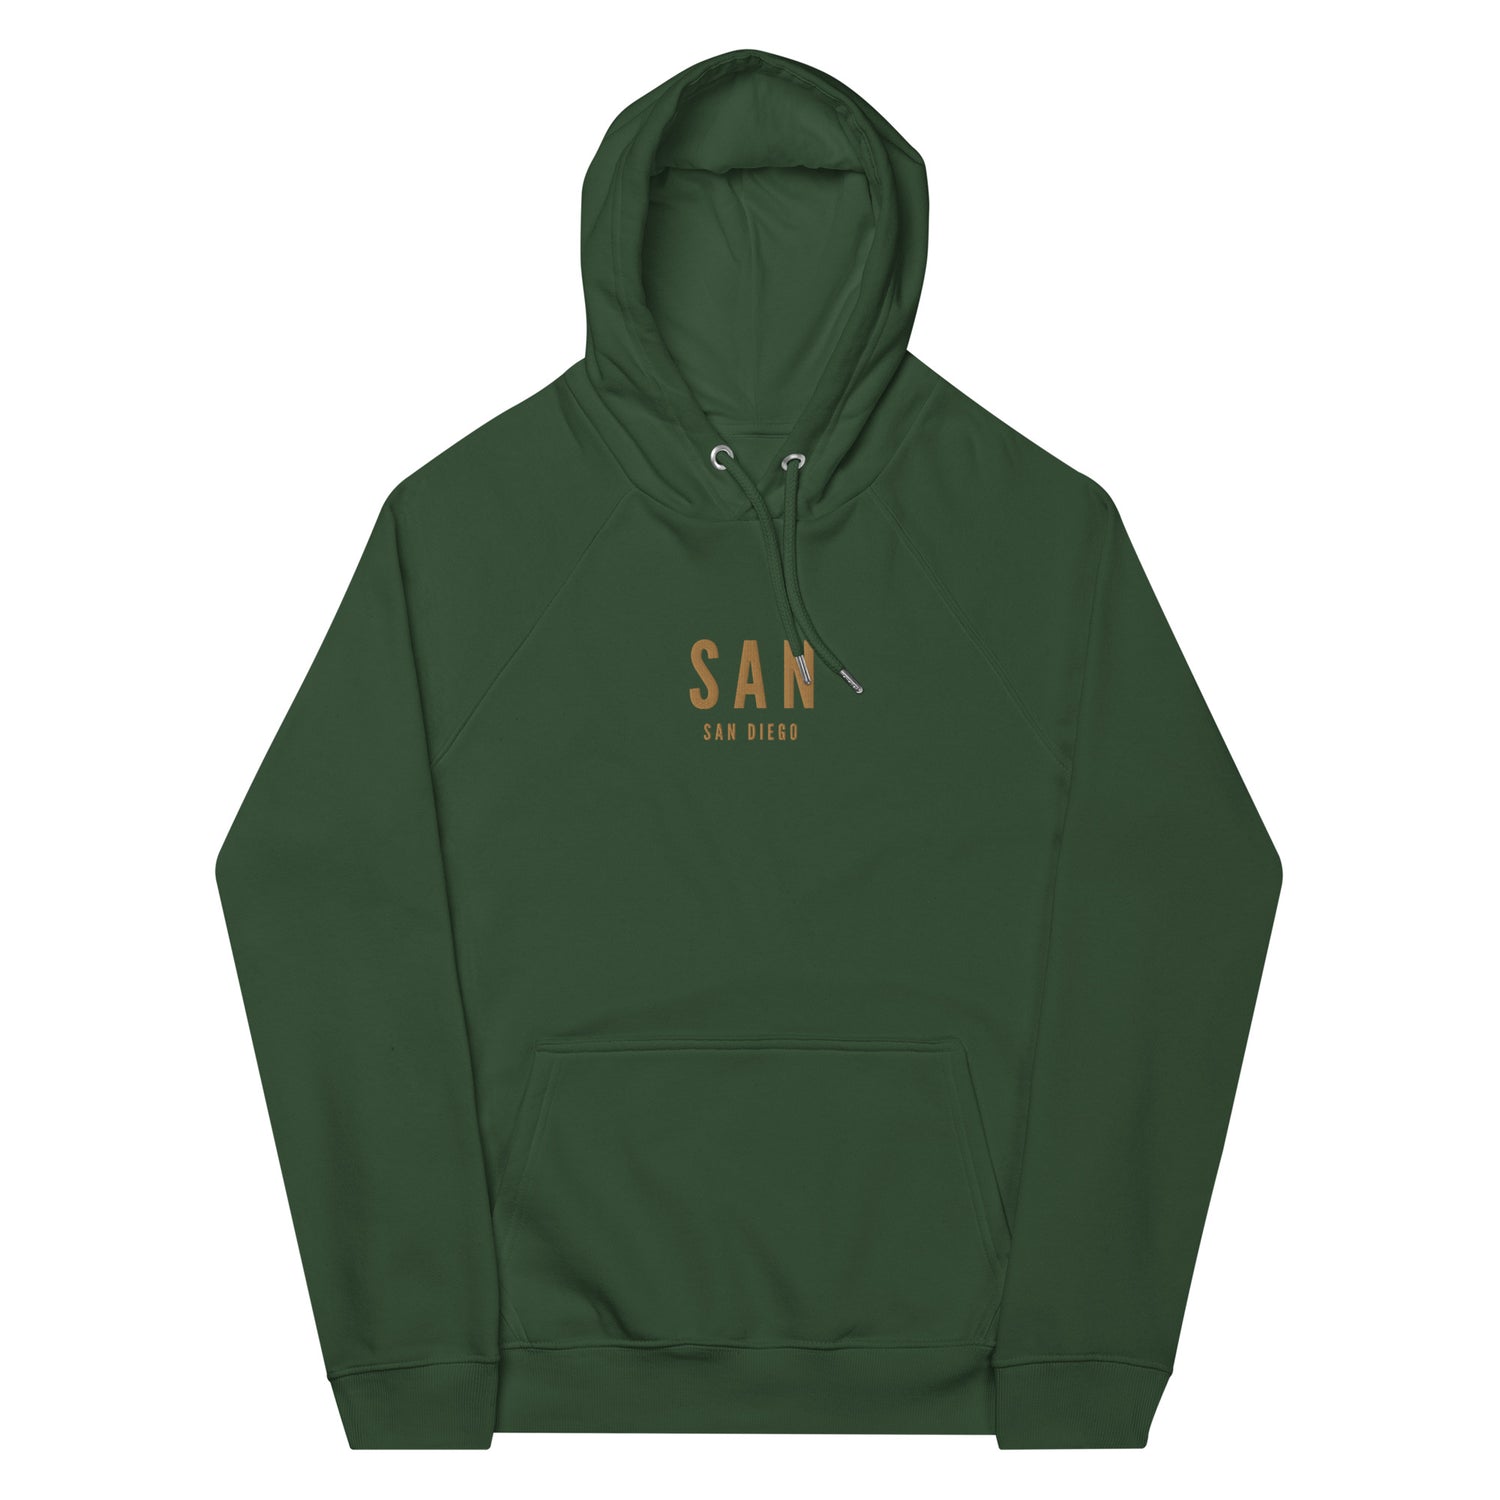 San Diego California Hoodies and Sweatshirts • SAN Airport Code